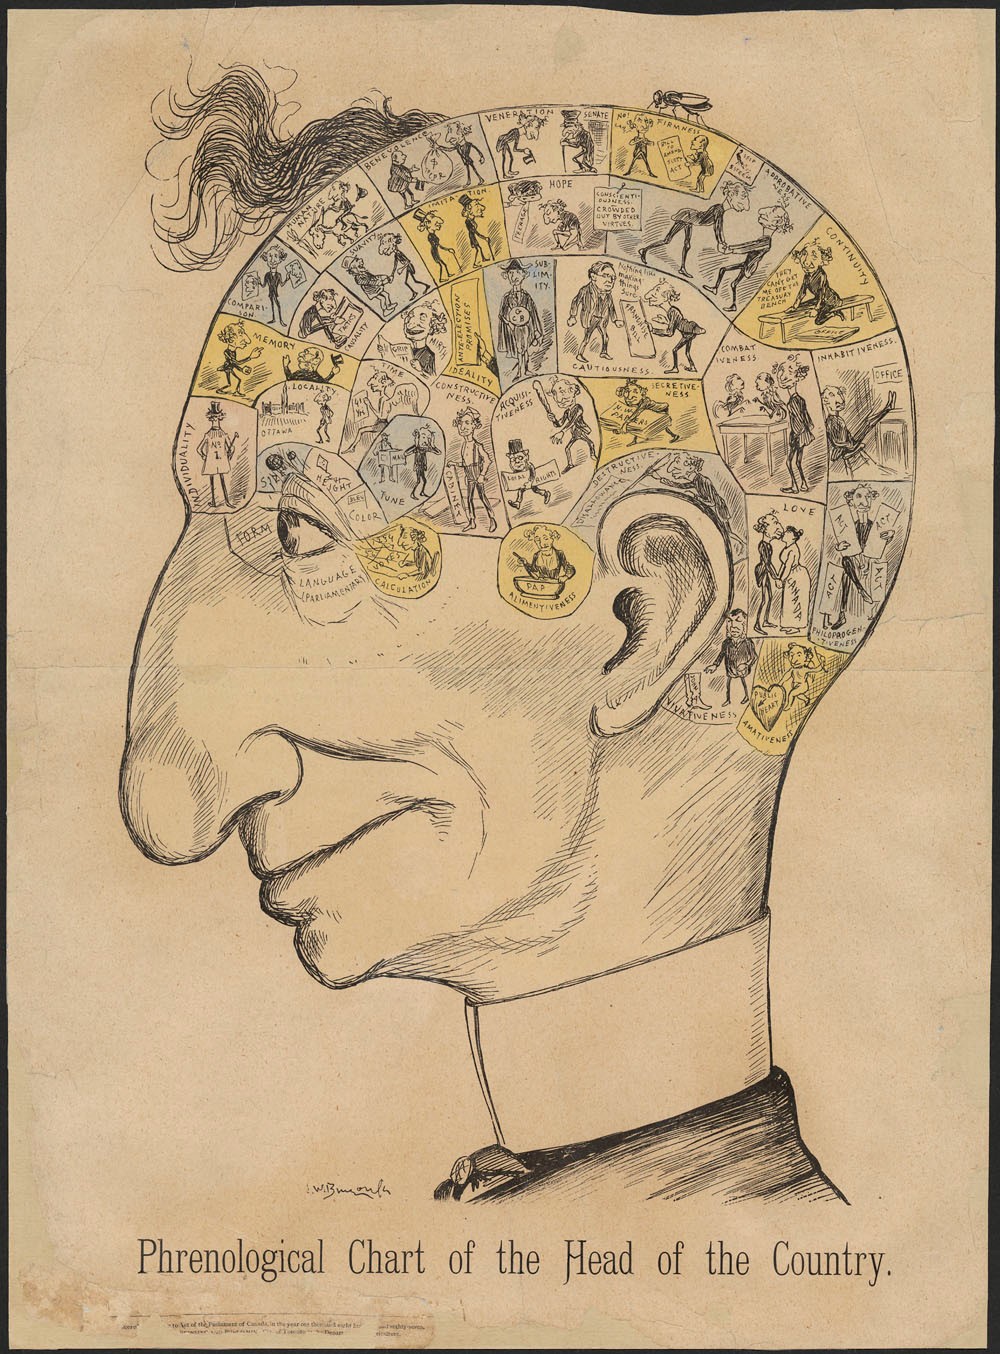 A cartoon head of a bald man segmented